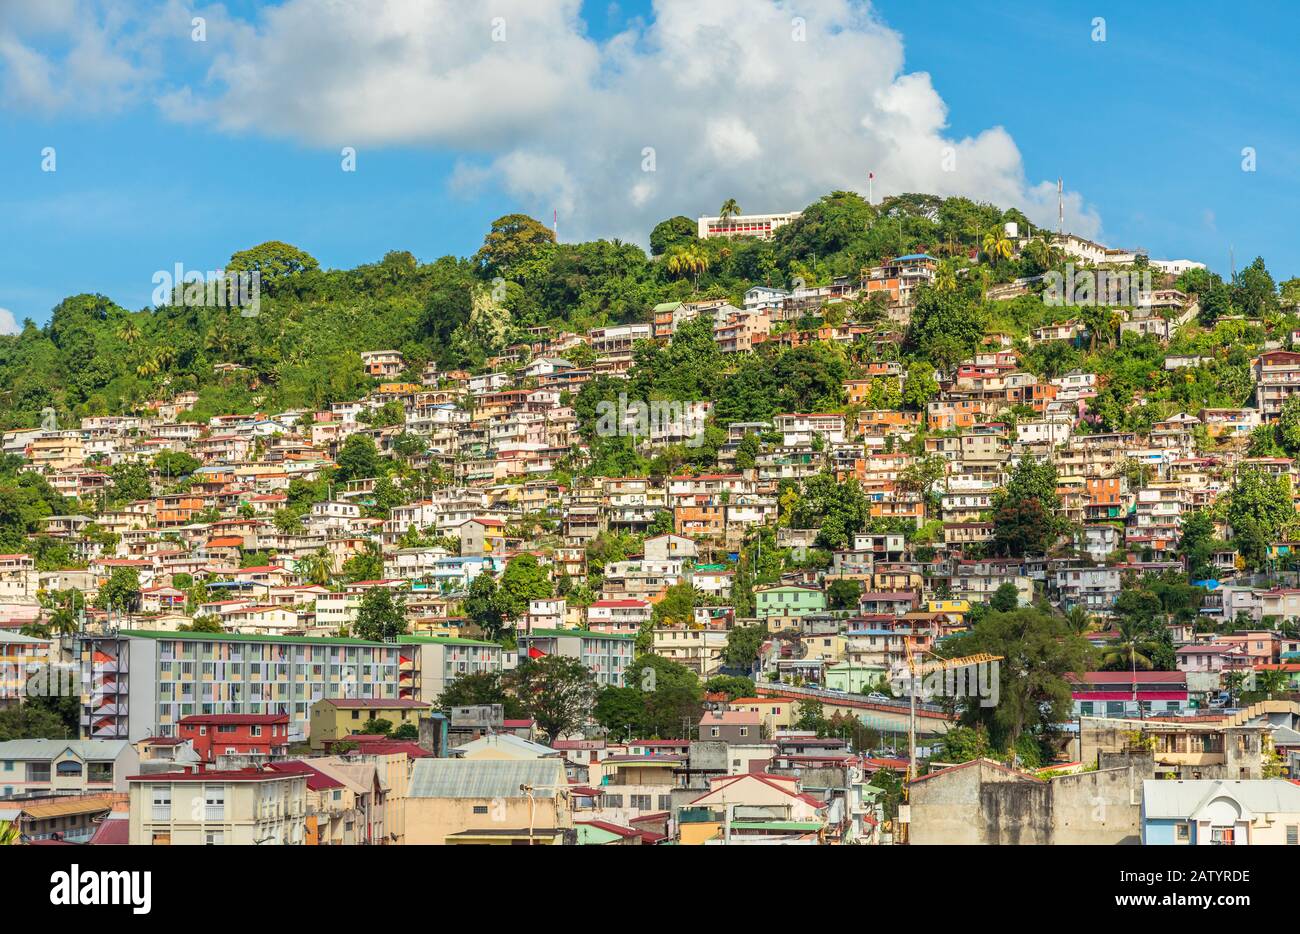 Un sacco di favelas shantytown sulla collina, Fort De France, Martinica, dipartimento francese d'oltremare Foto Stock